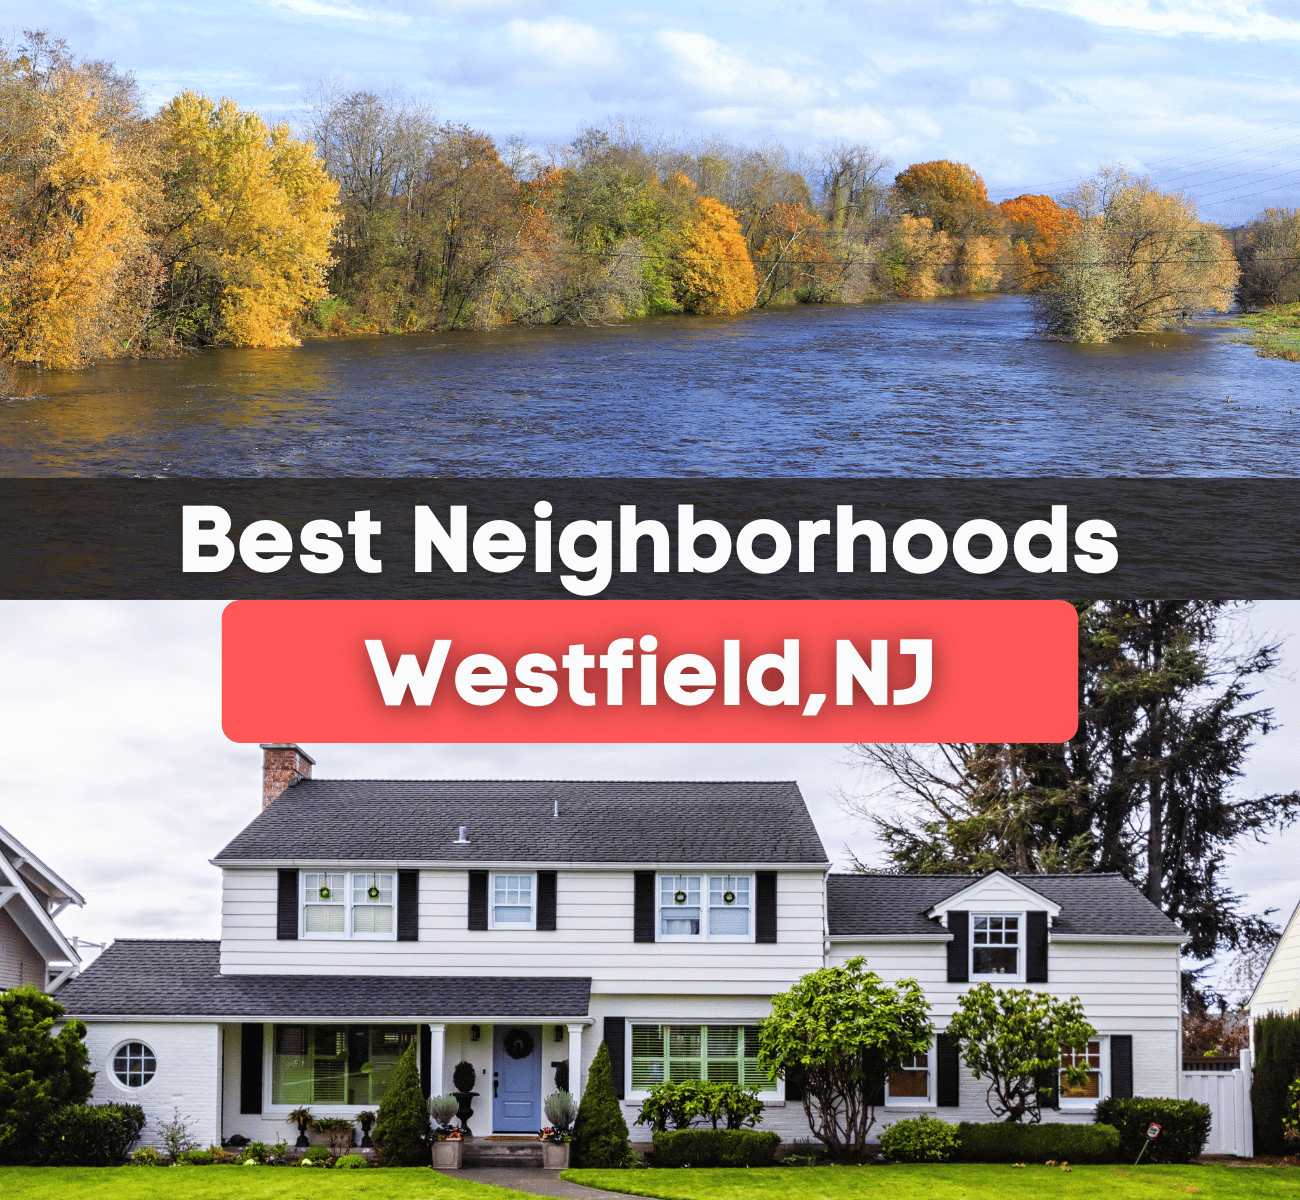 best neighborhoods in Westfield, NJ graphic - house in Westfield 